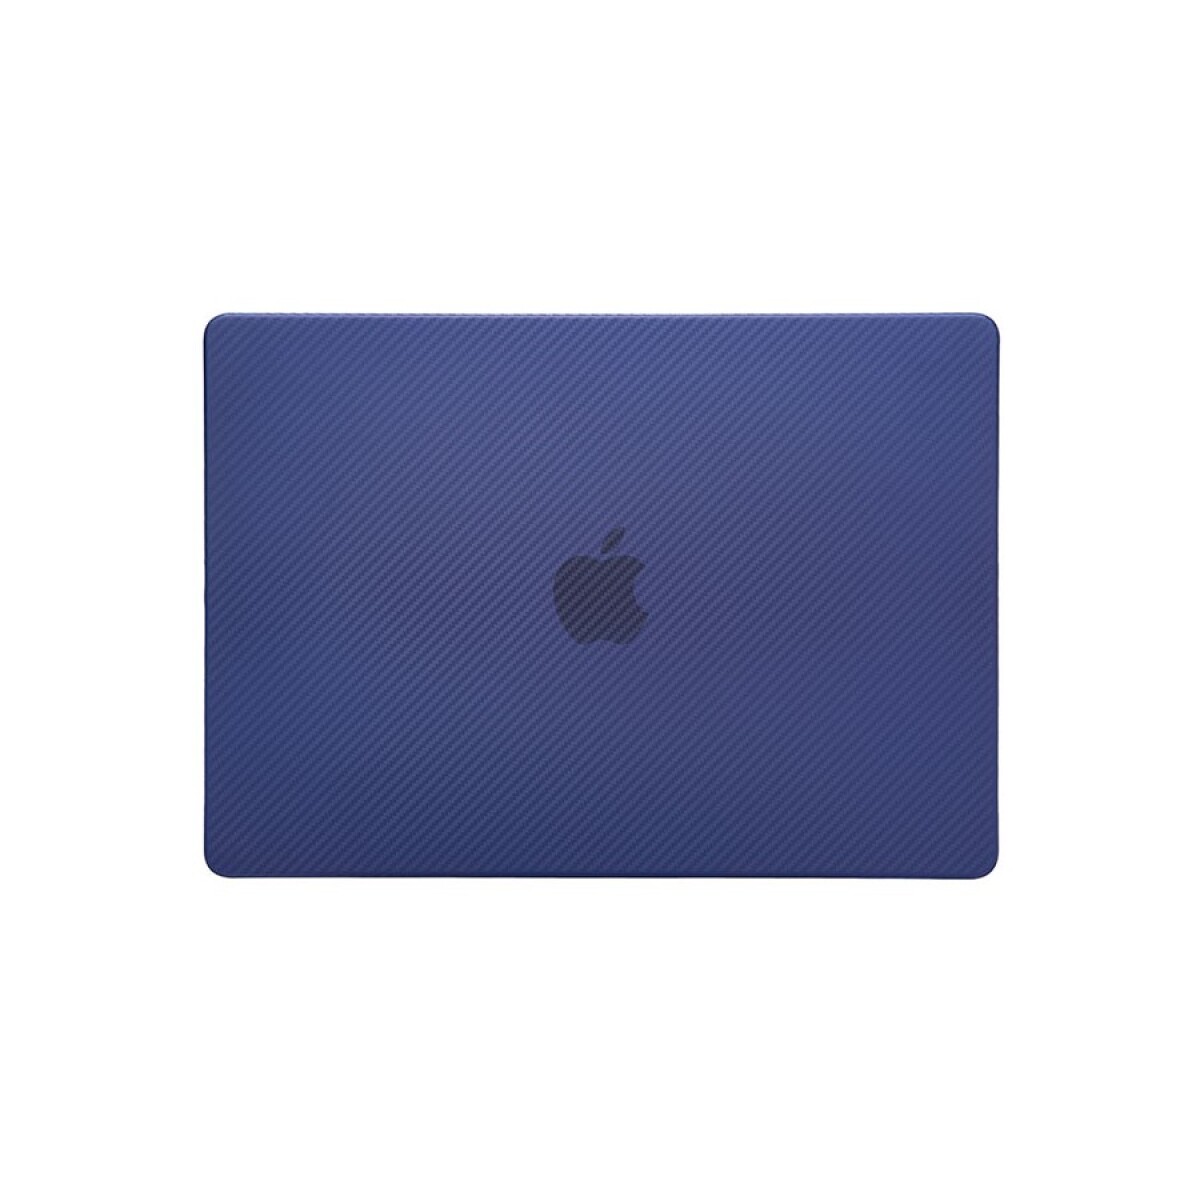 Carcasa protectora hardsell fibra carbono para macbook 13' 2020 devia Peony blue